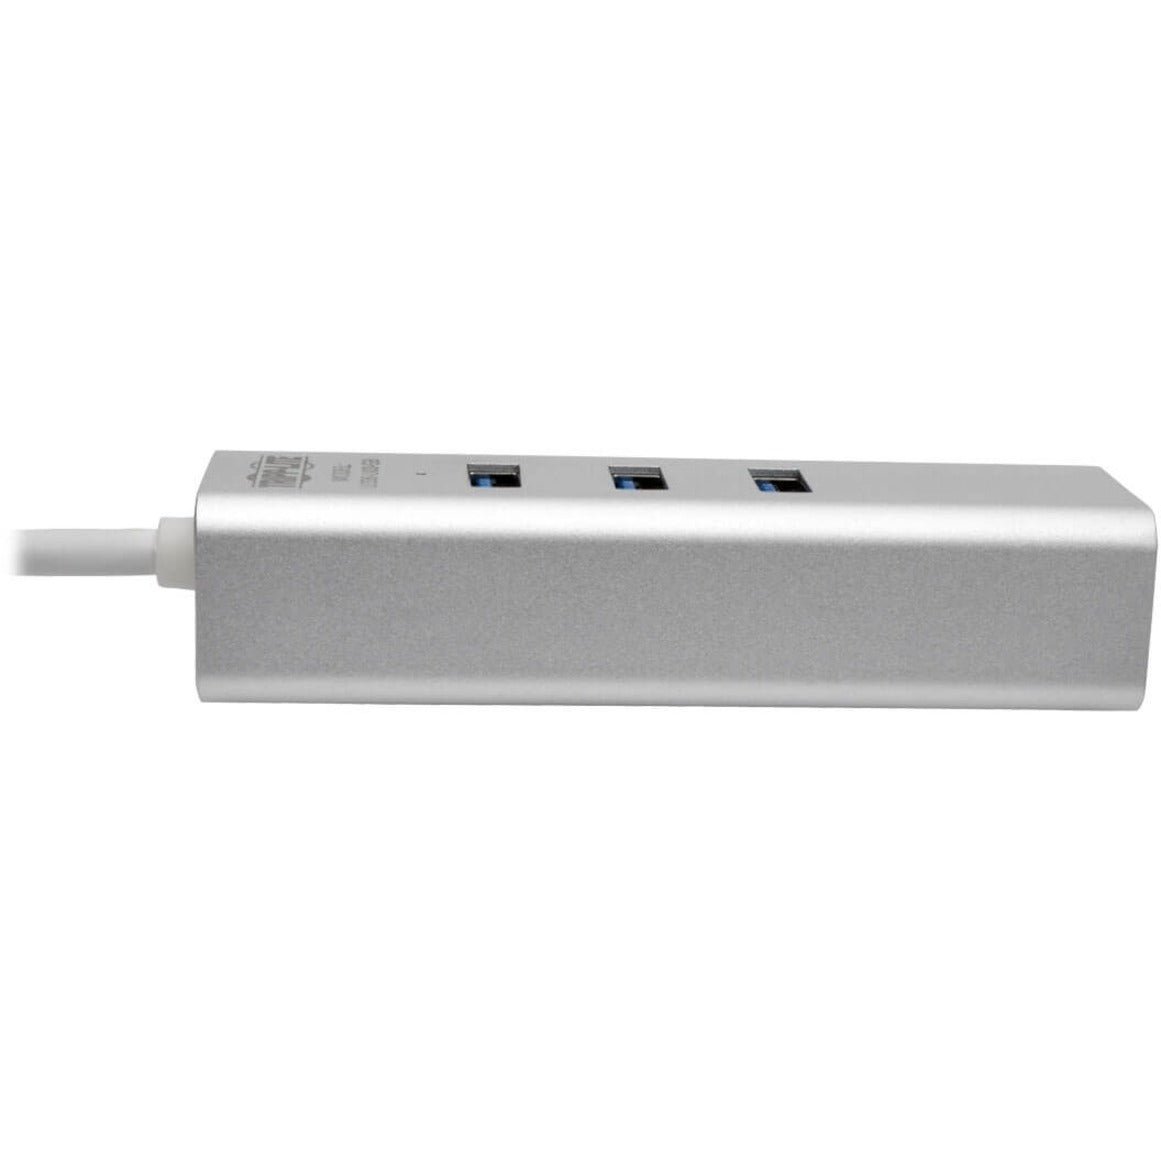 Tripp Lite U336-U03-GB USB 3.0SUPERSPEED GIG ETH NIC ADAPTER3PT USB 3.0HU, Gigabit Ethernet Card